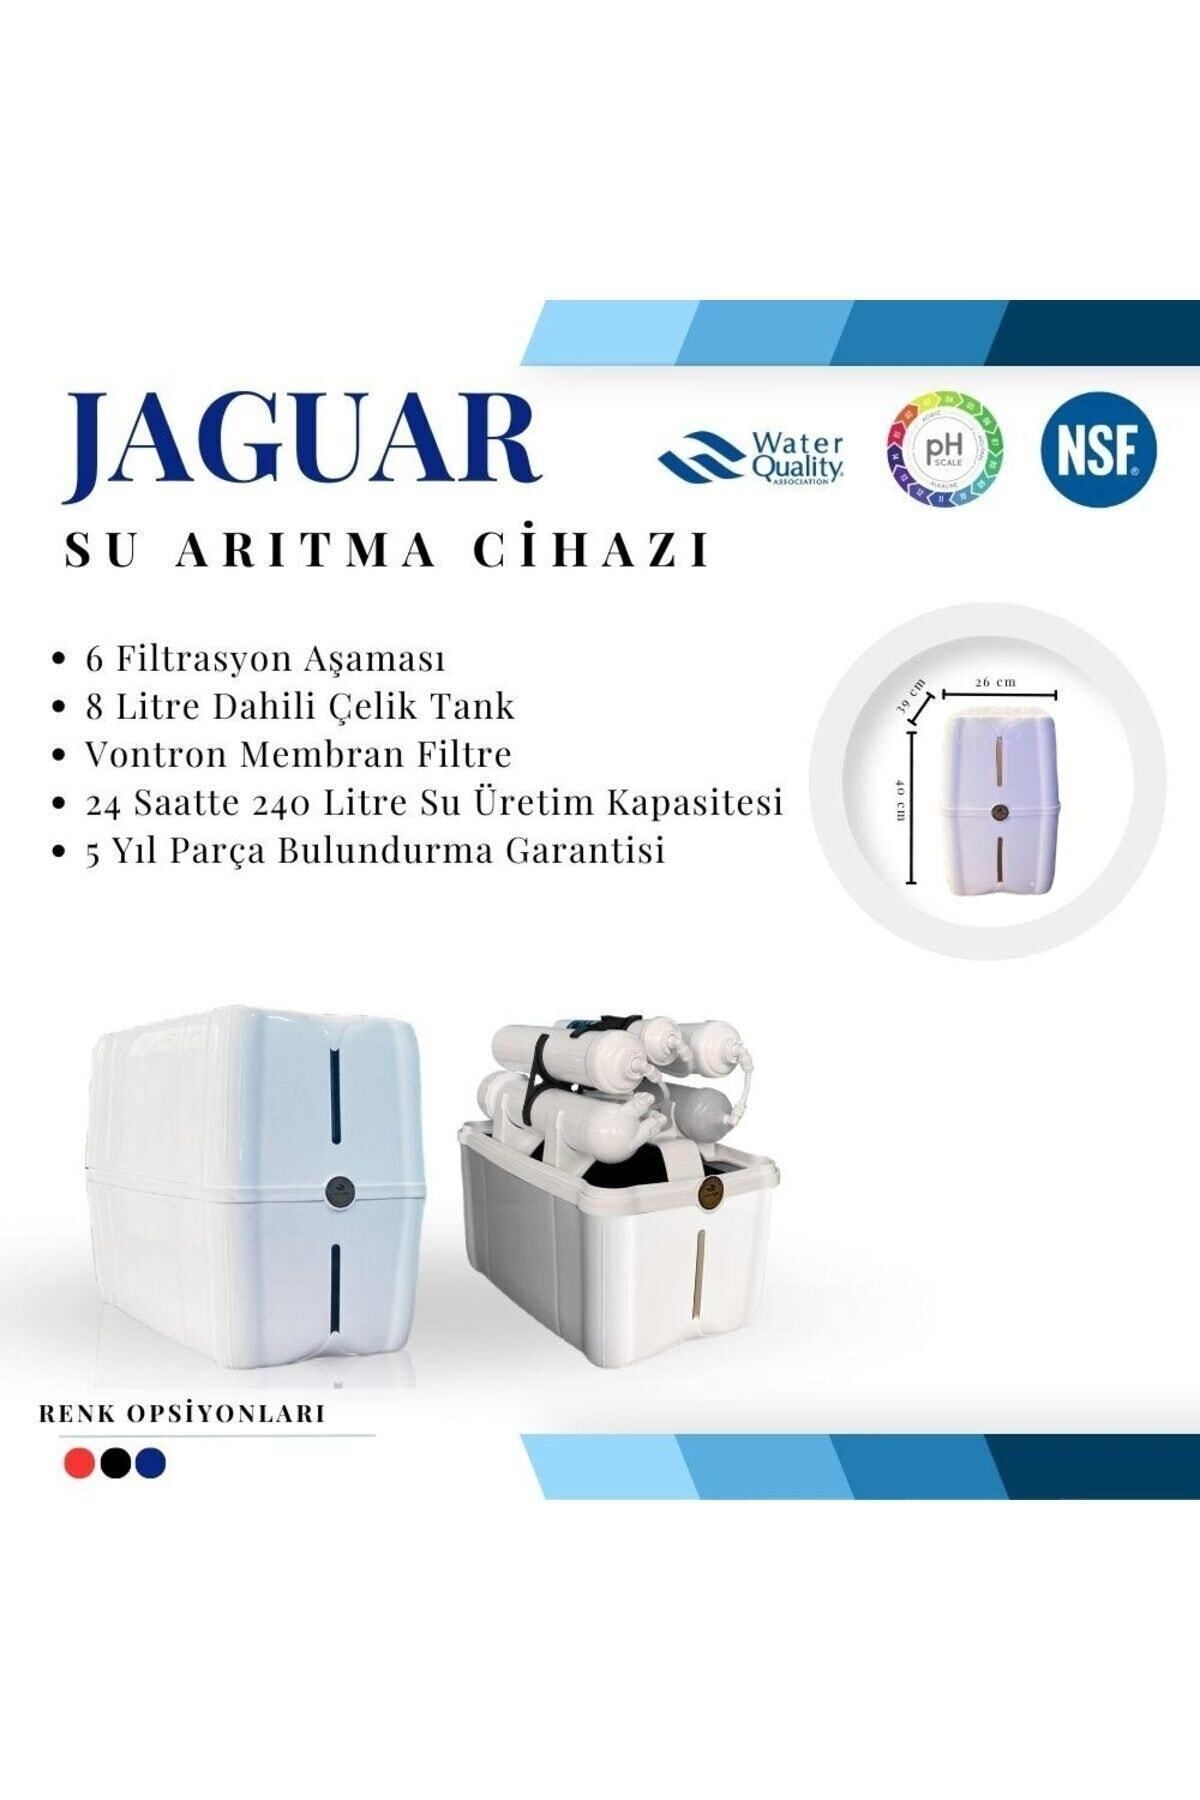 Jaguar 8 Litre Su Arıtma Cihazı